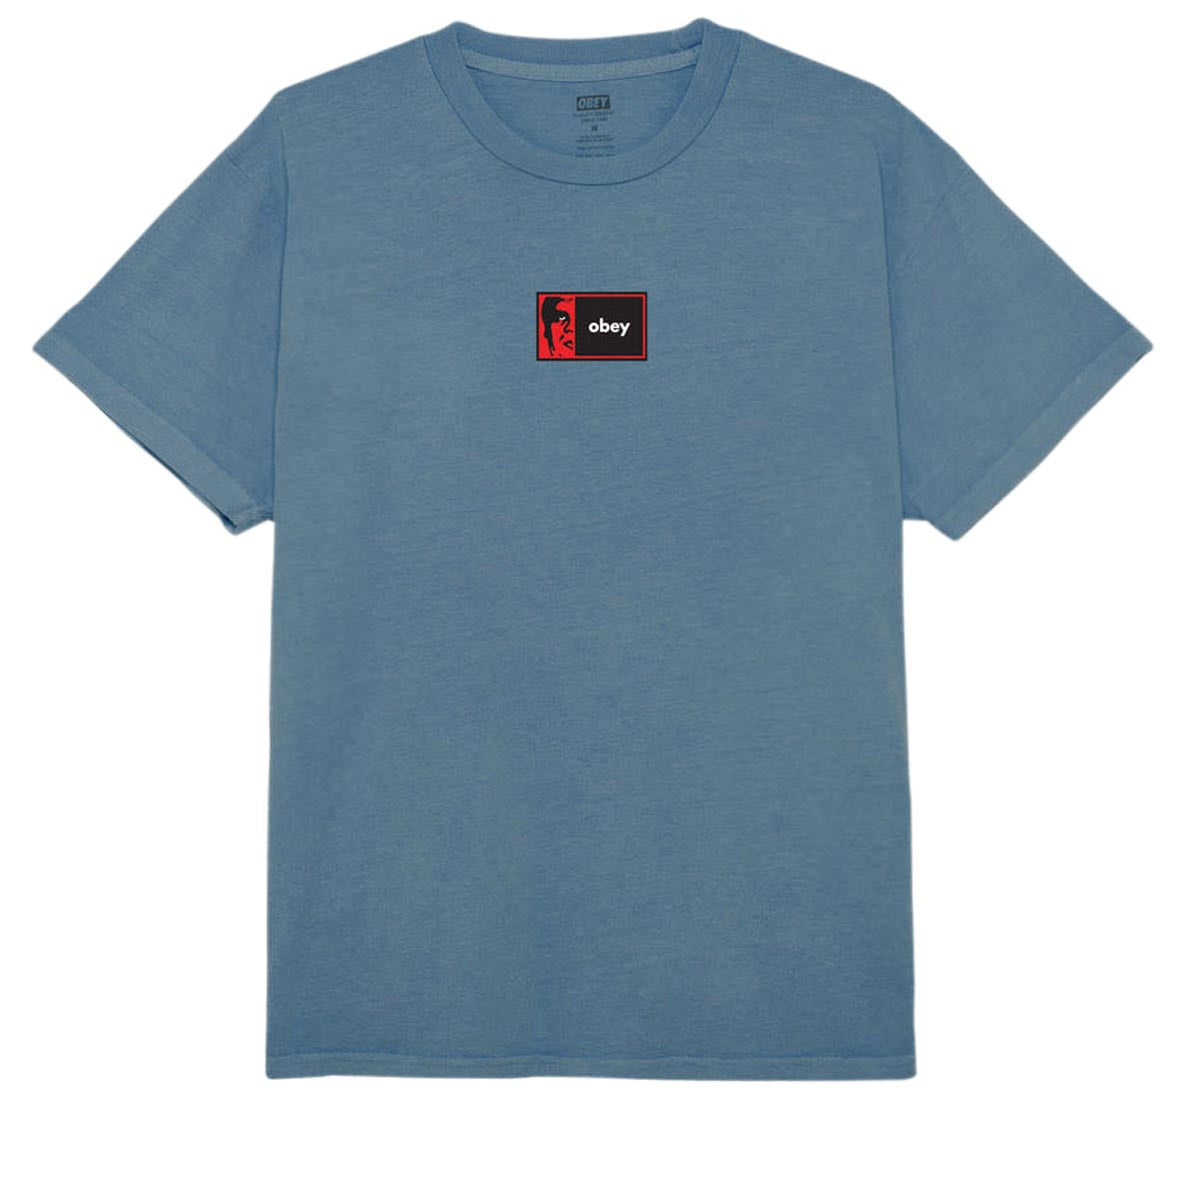 Obey Half Icon T-Shirt - Pigment Coronet Blue image 1